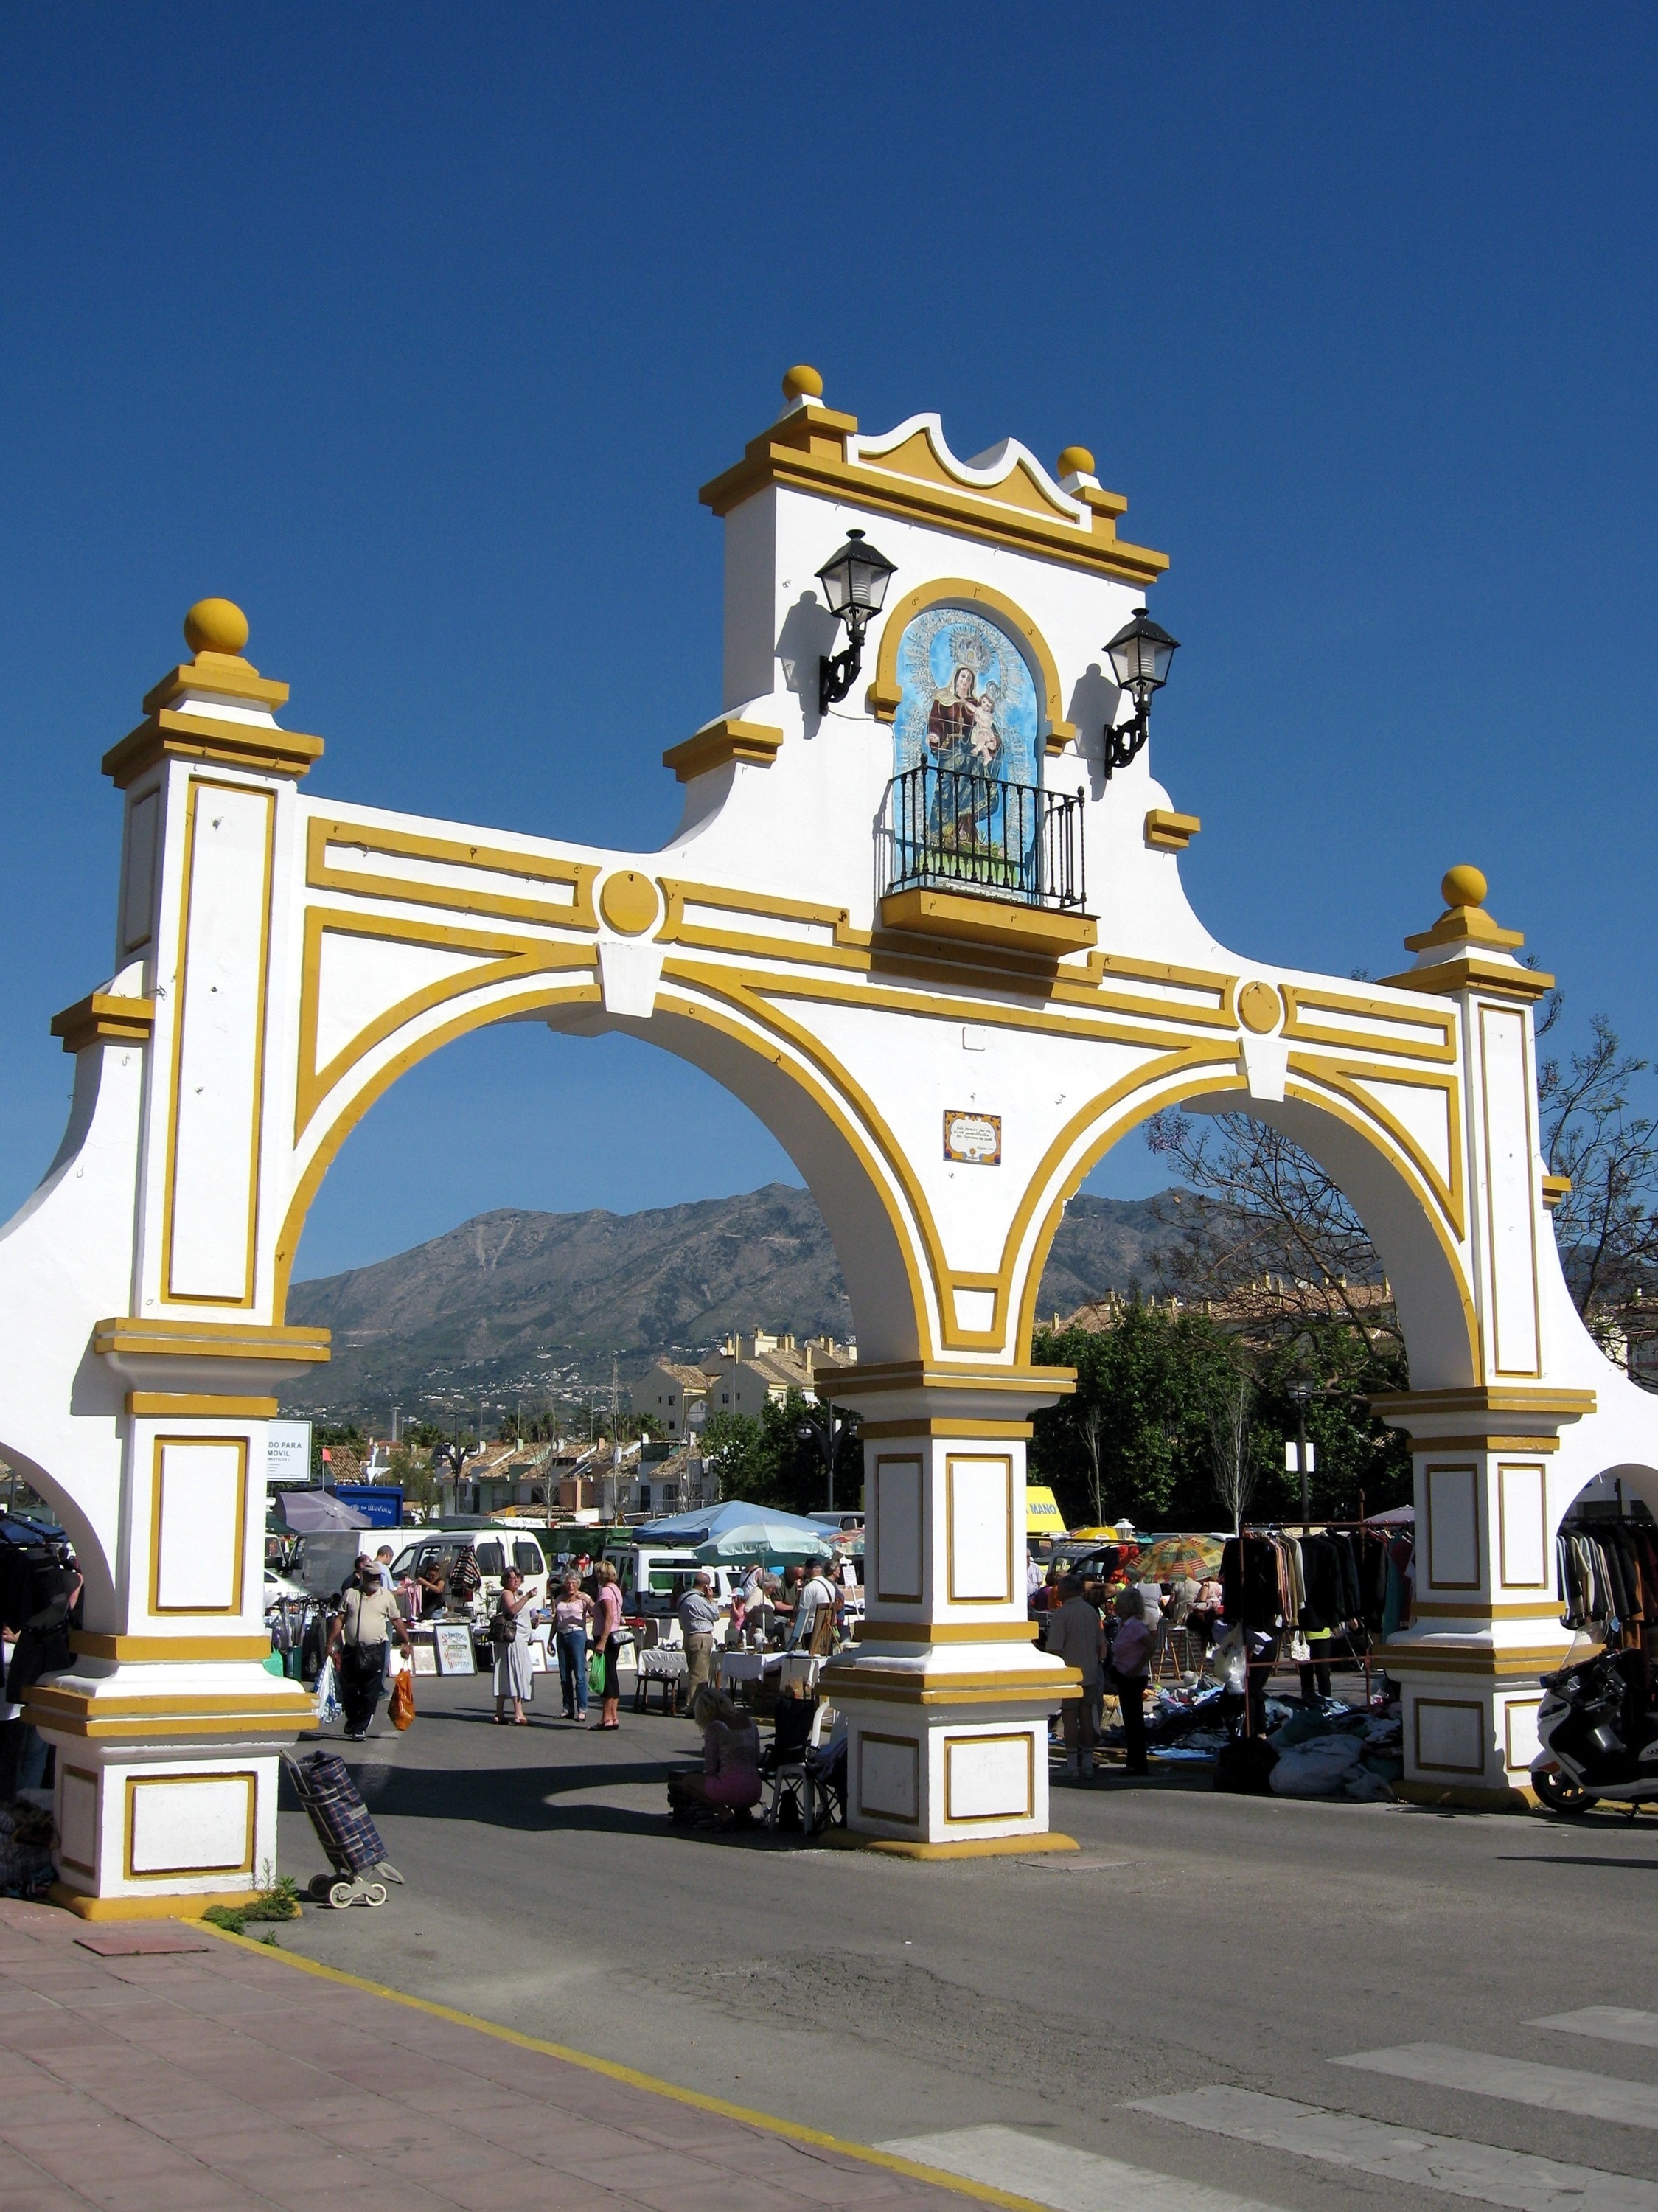 Fuengirola's Fair